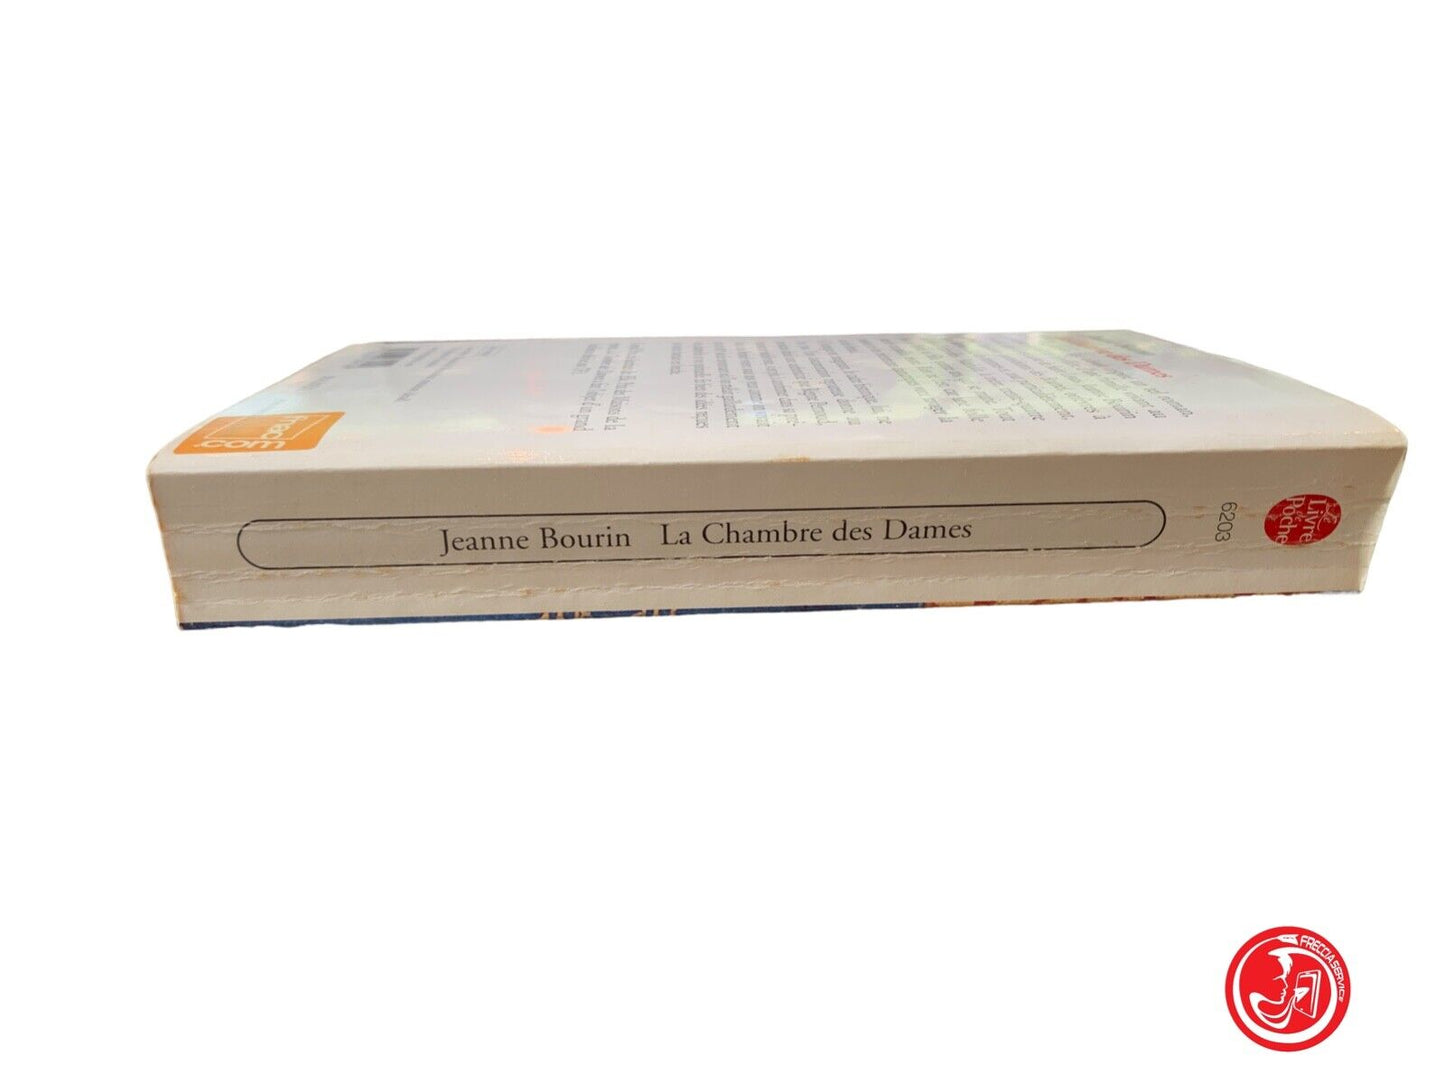 La Chambre des Dames - Jeanne Bourin - Editions de la table ronde